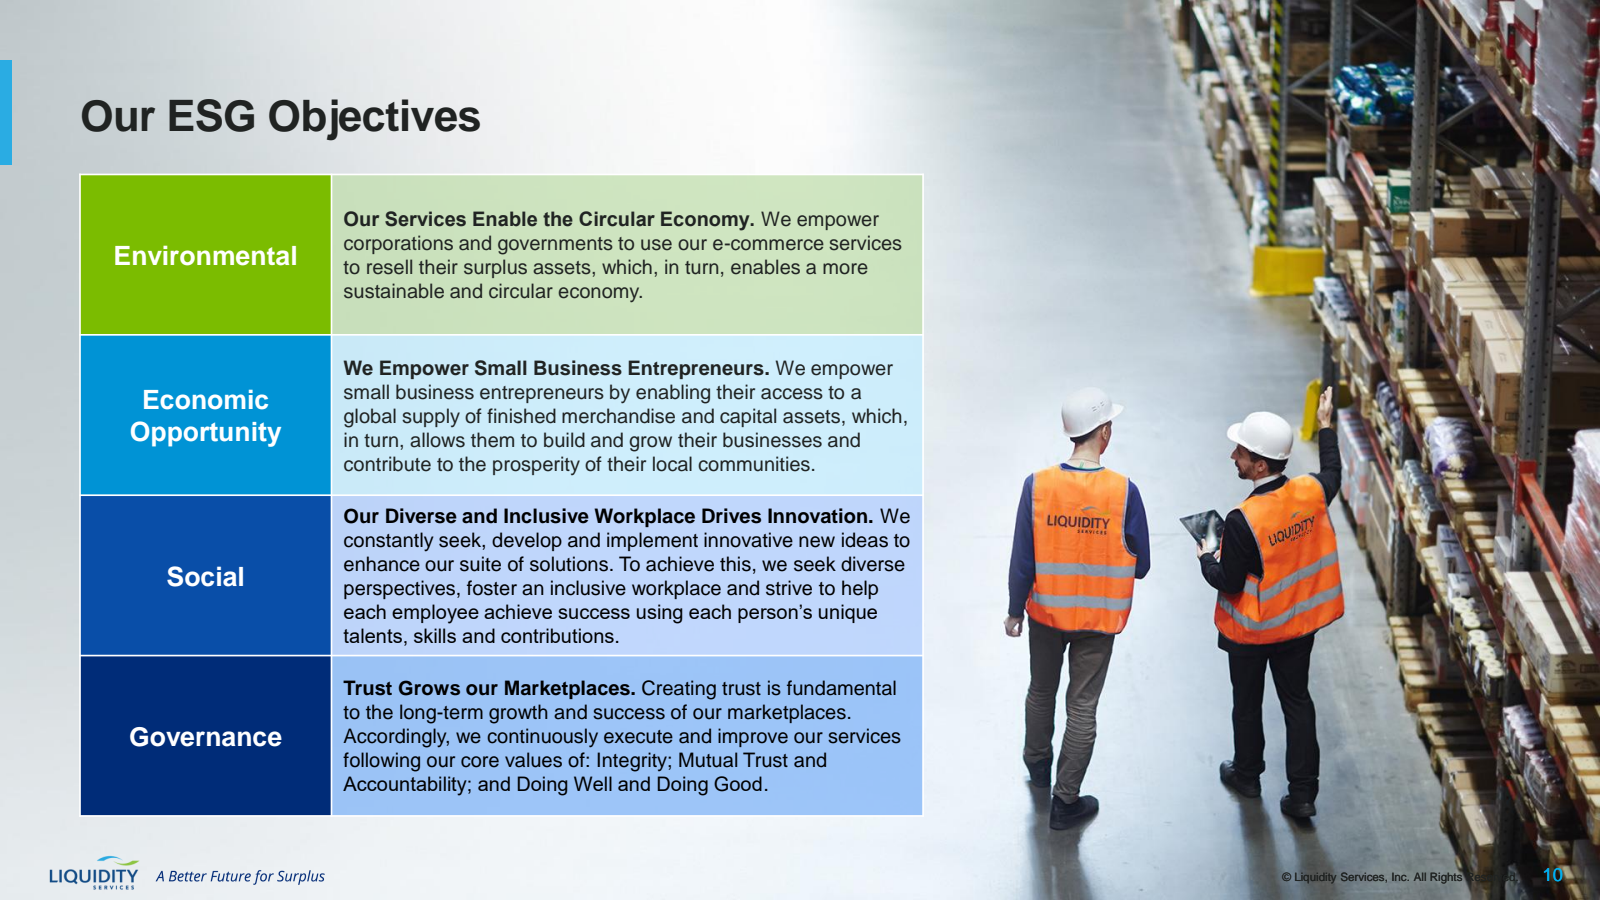 Our ESG Objectives 
